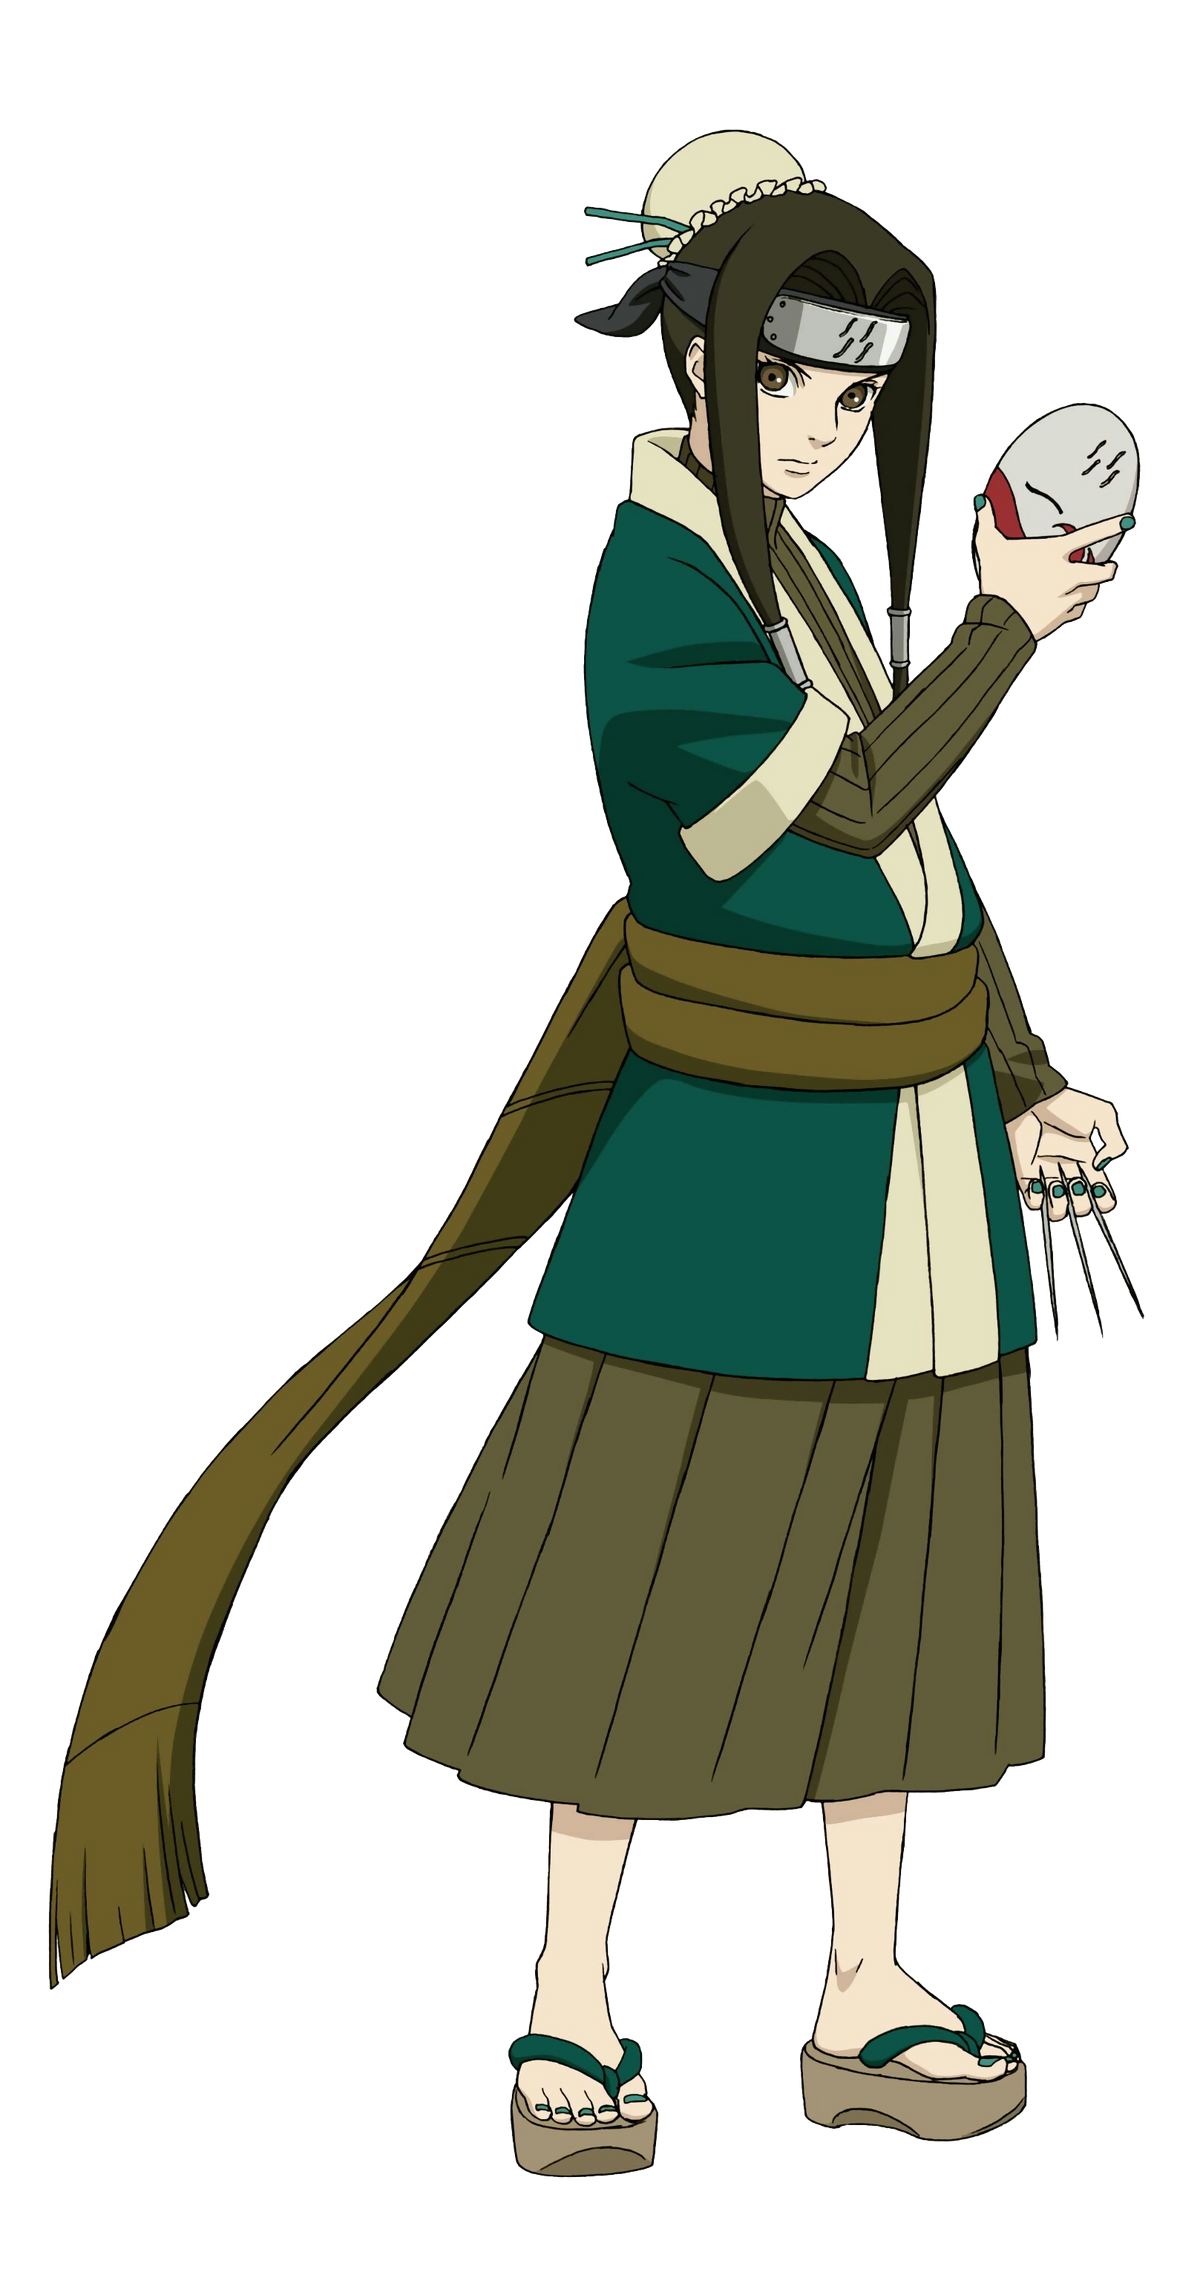 Mod The Sims - Konoha clothes (anime Naruto)